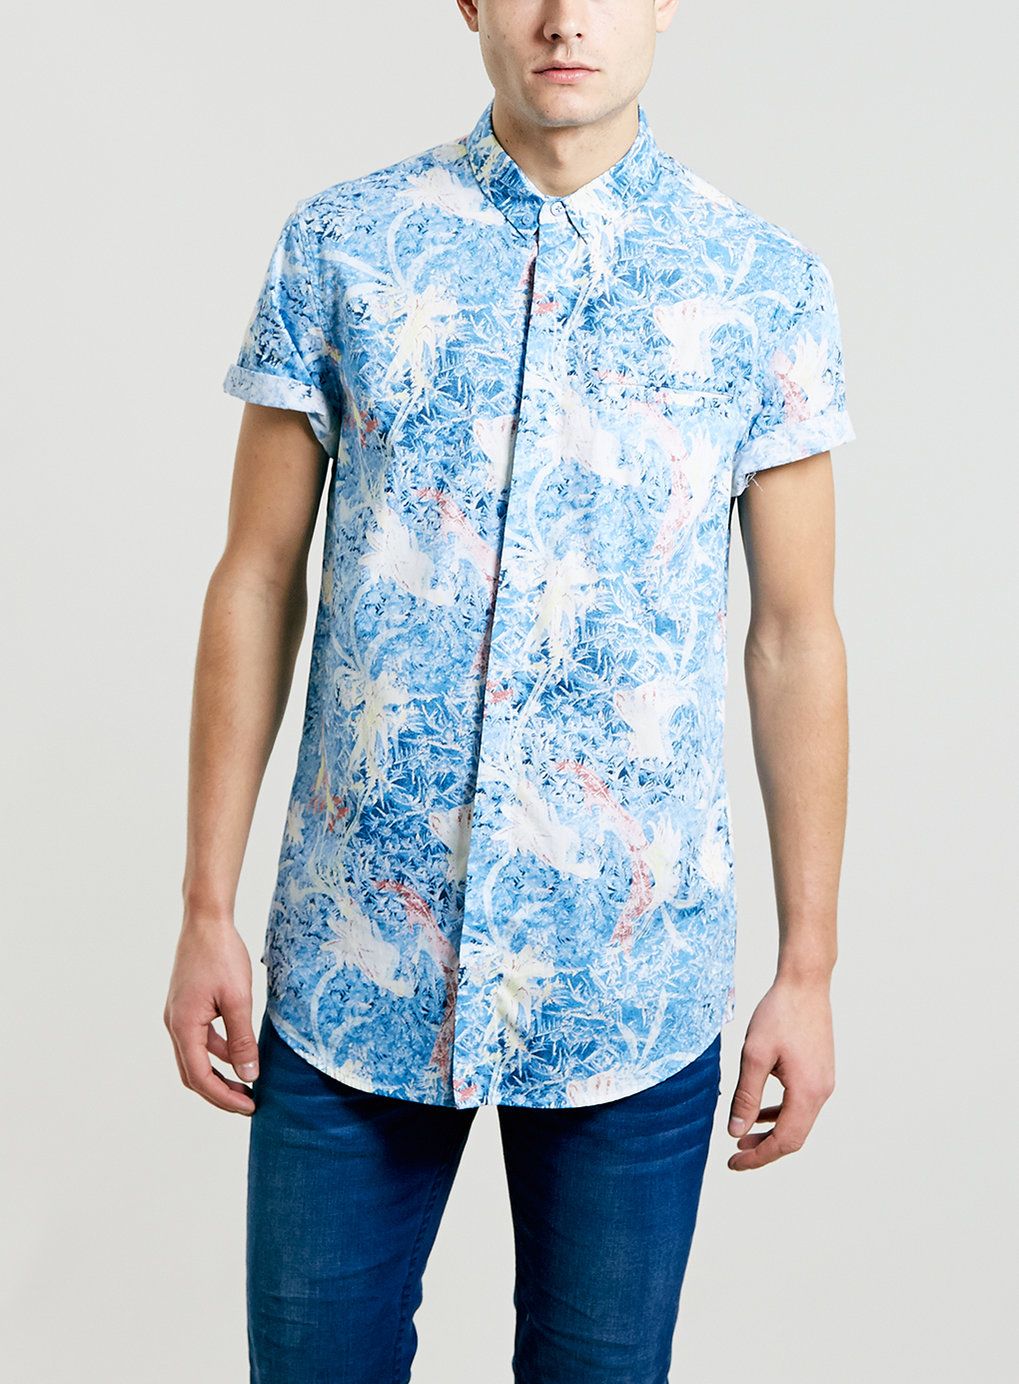 Topman Abstract Floral Print Shirt